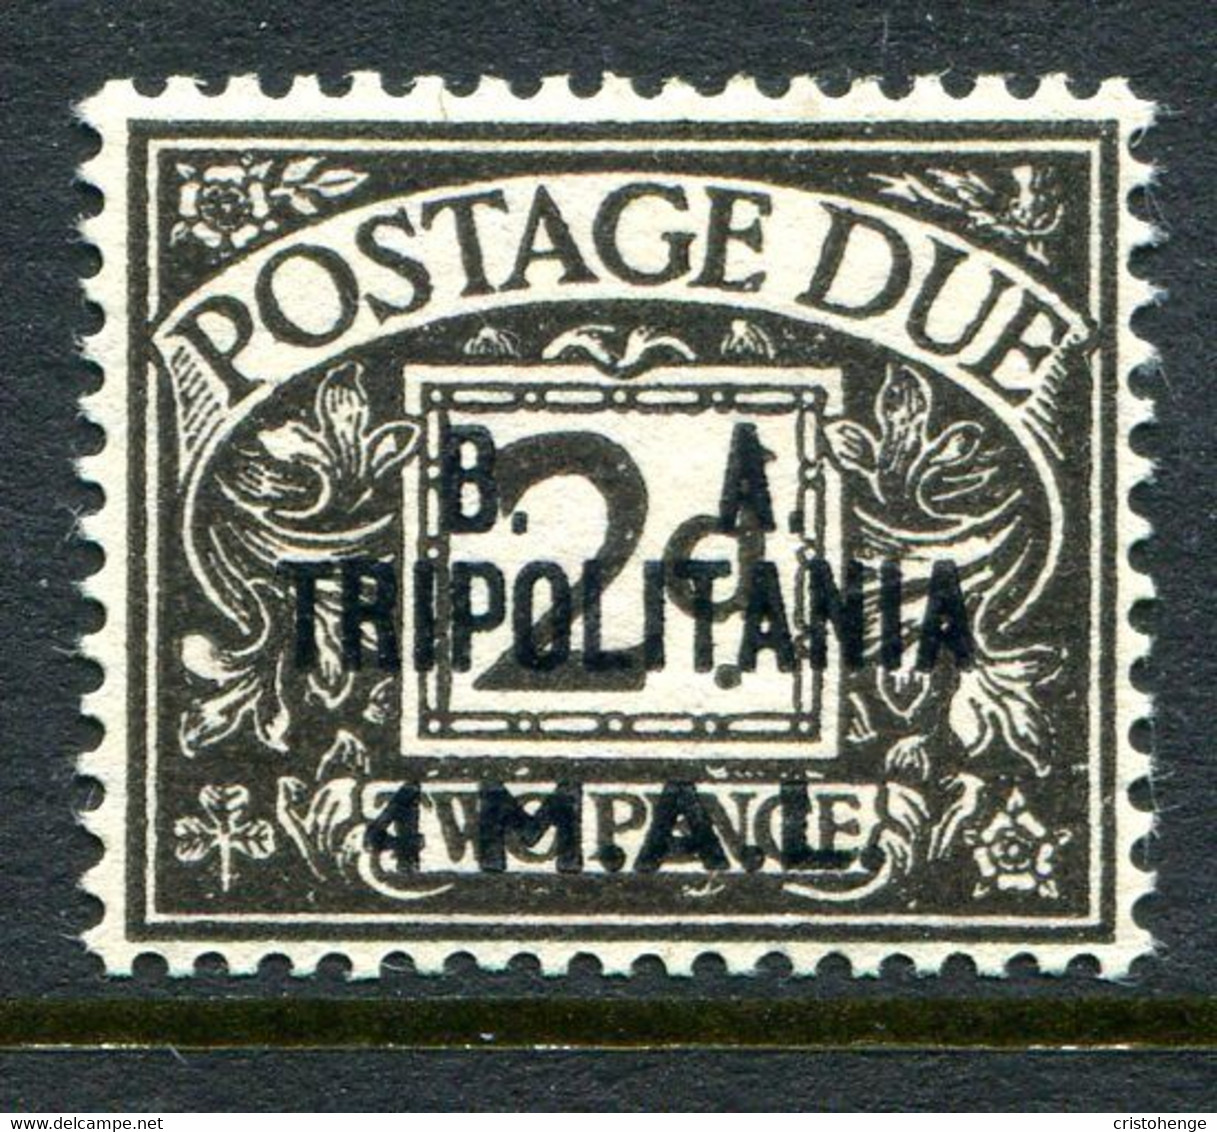 British Occ. Italian Colonies - Tripolitania - 1950 Postage Dues - B.A. - 4l On 2d Agate HM (SG TD8) - Tripolitania